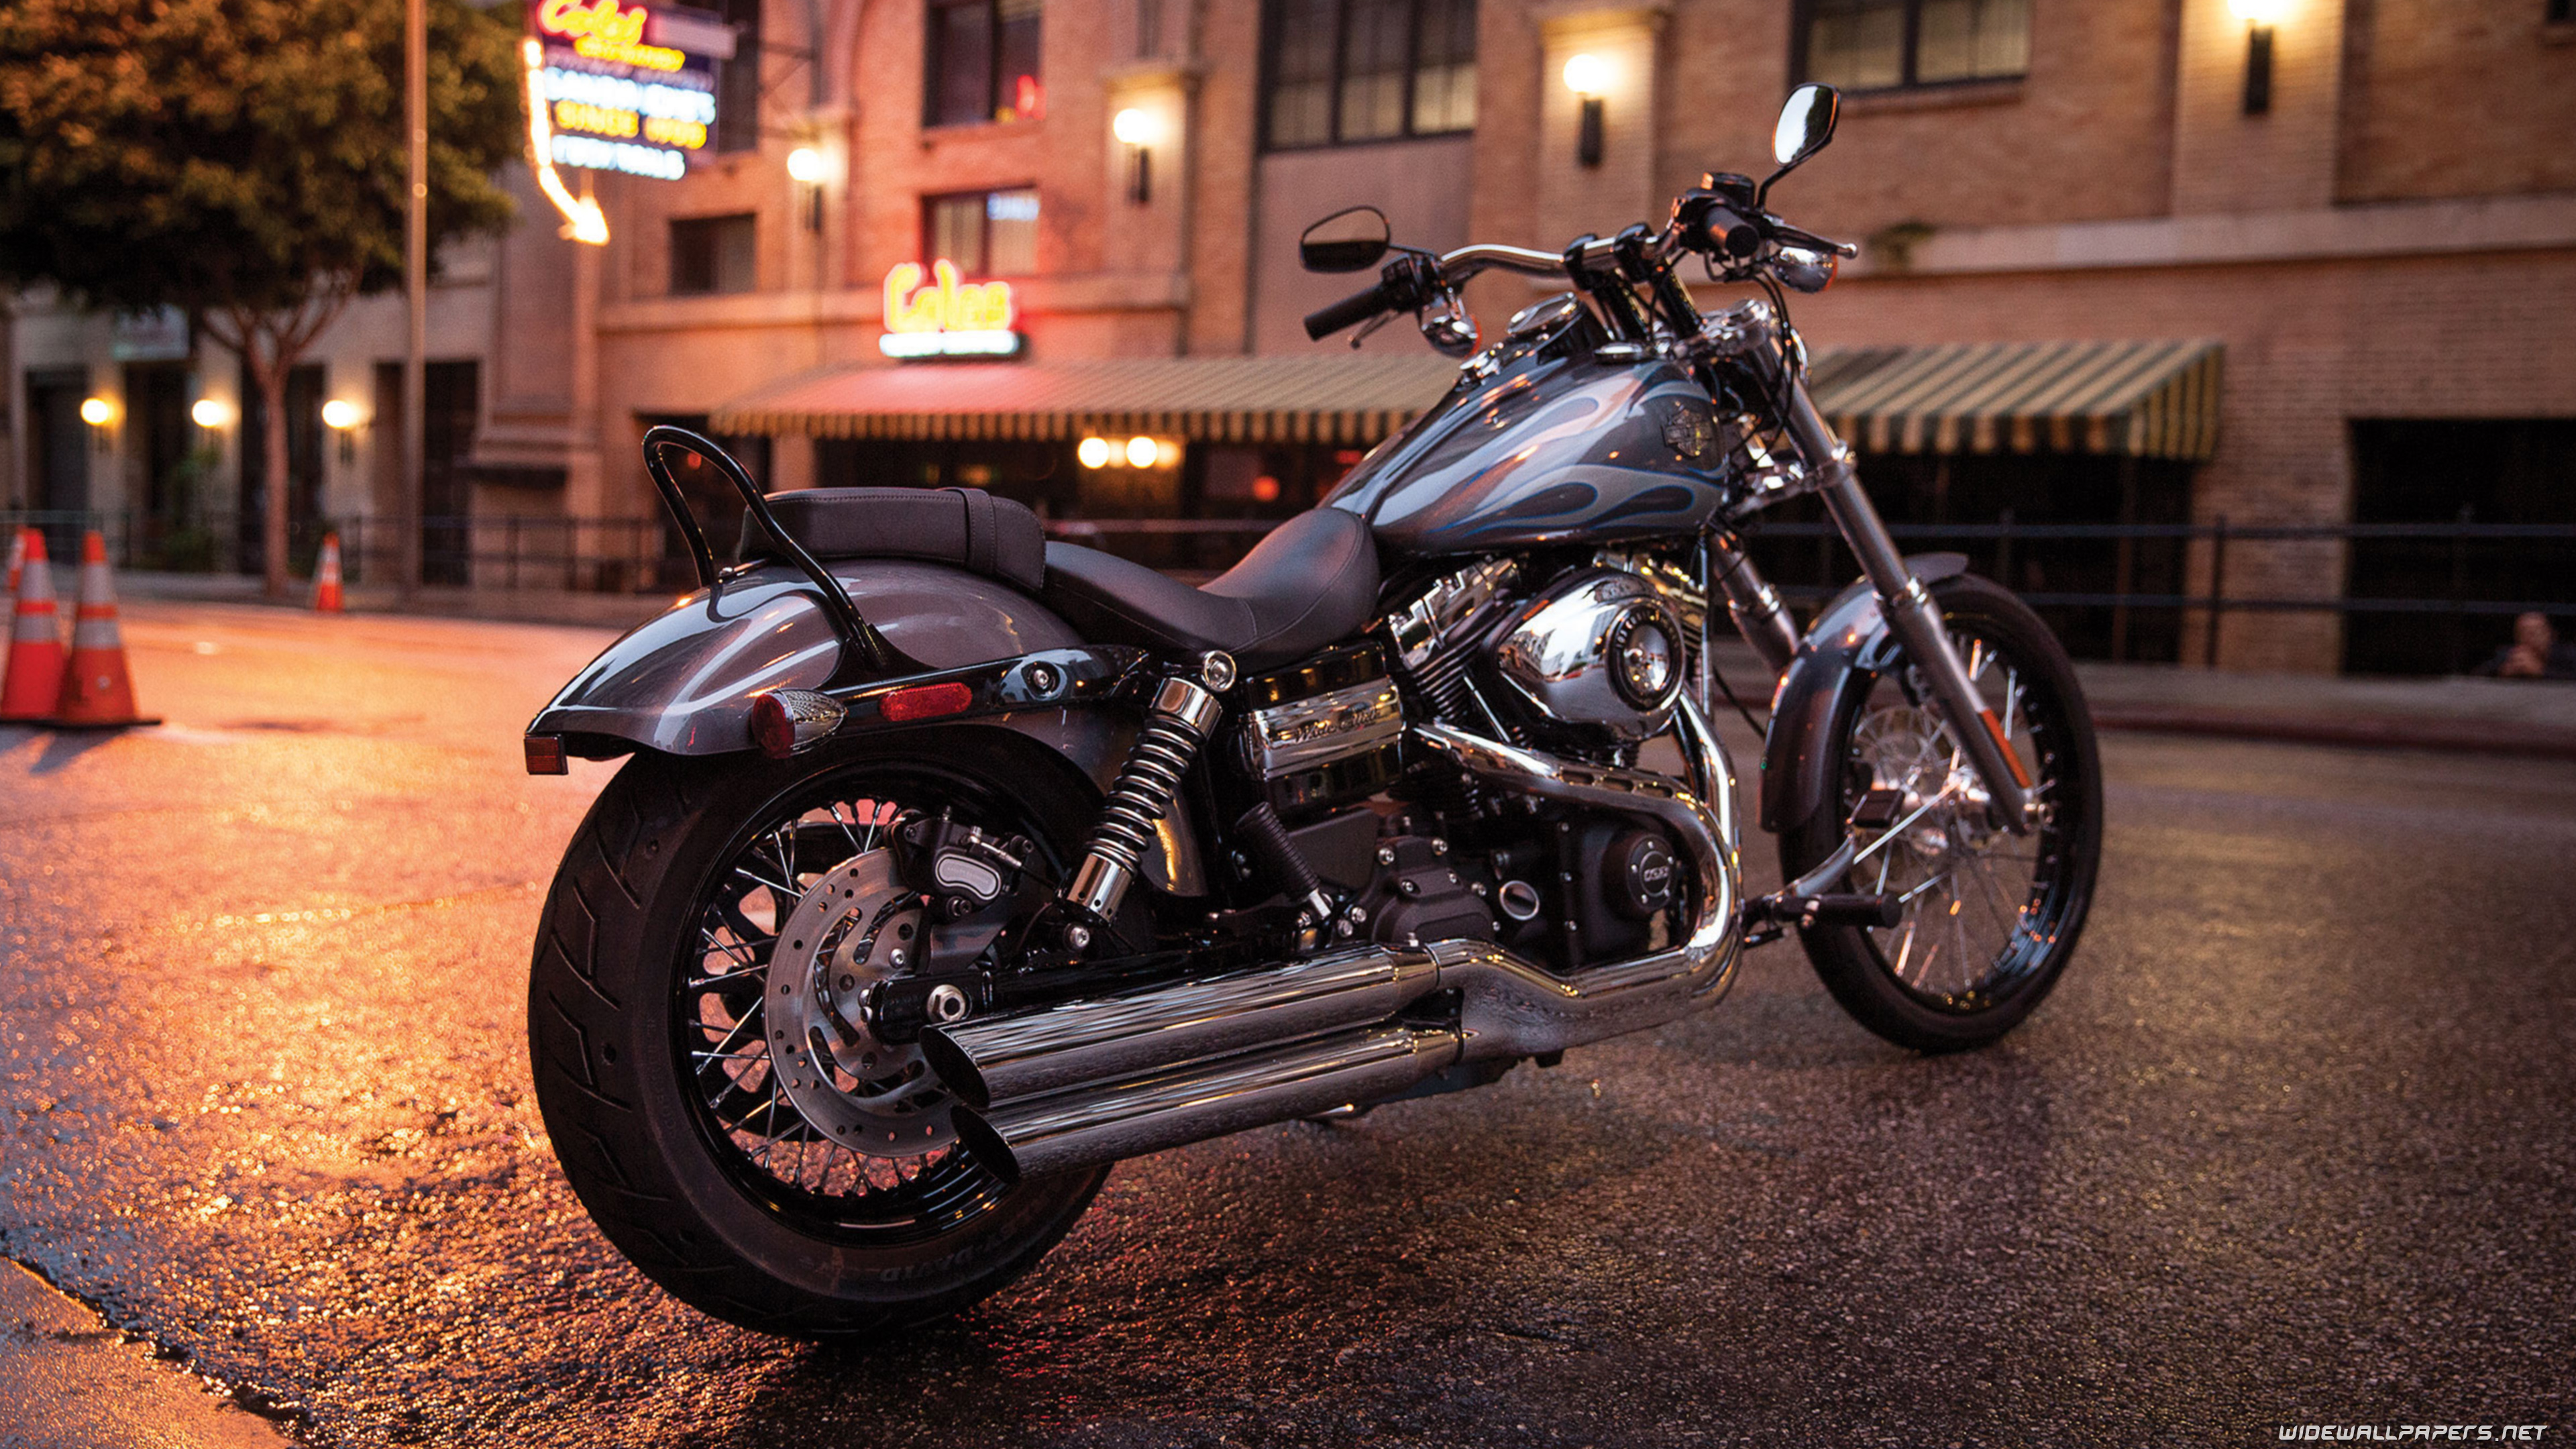 Harley Davidson Dyna Motorcycle Desktop Wallpaper 4k Ultra HD